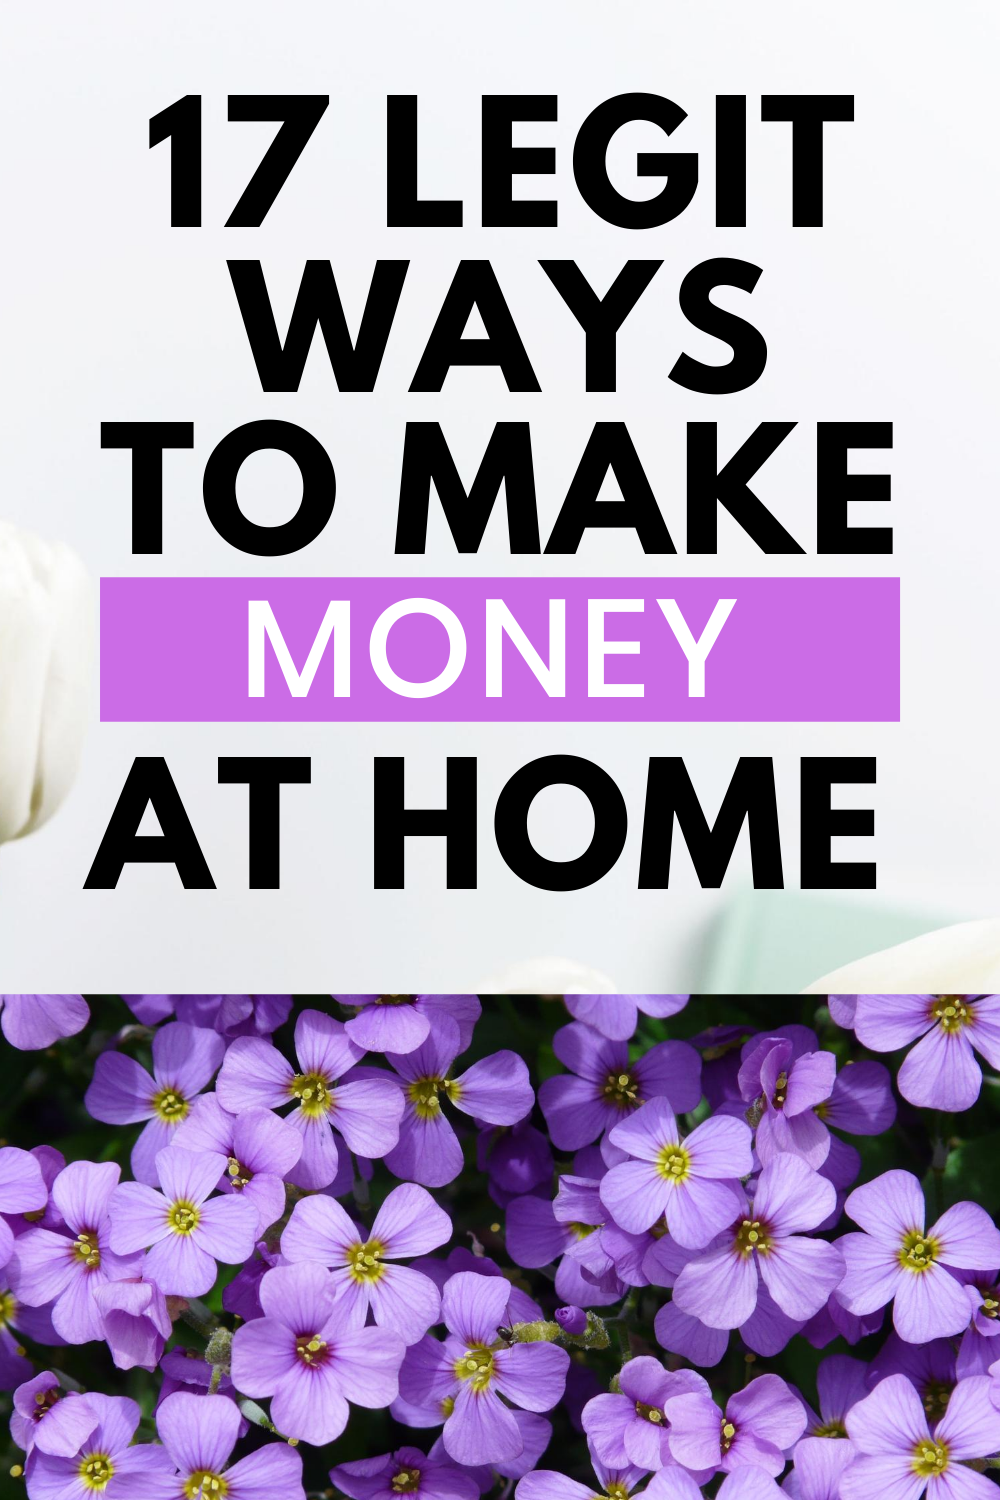 <img src="ana.jpg" alt="ana 17 legit ways to make money from home"/> 